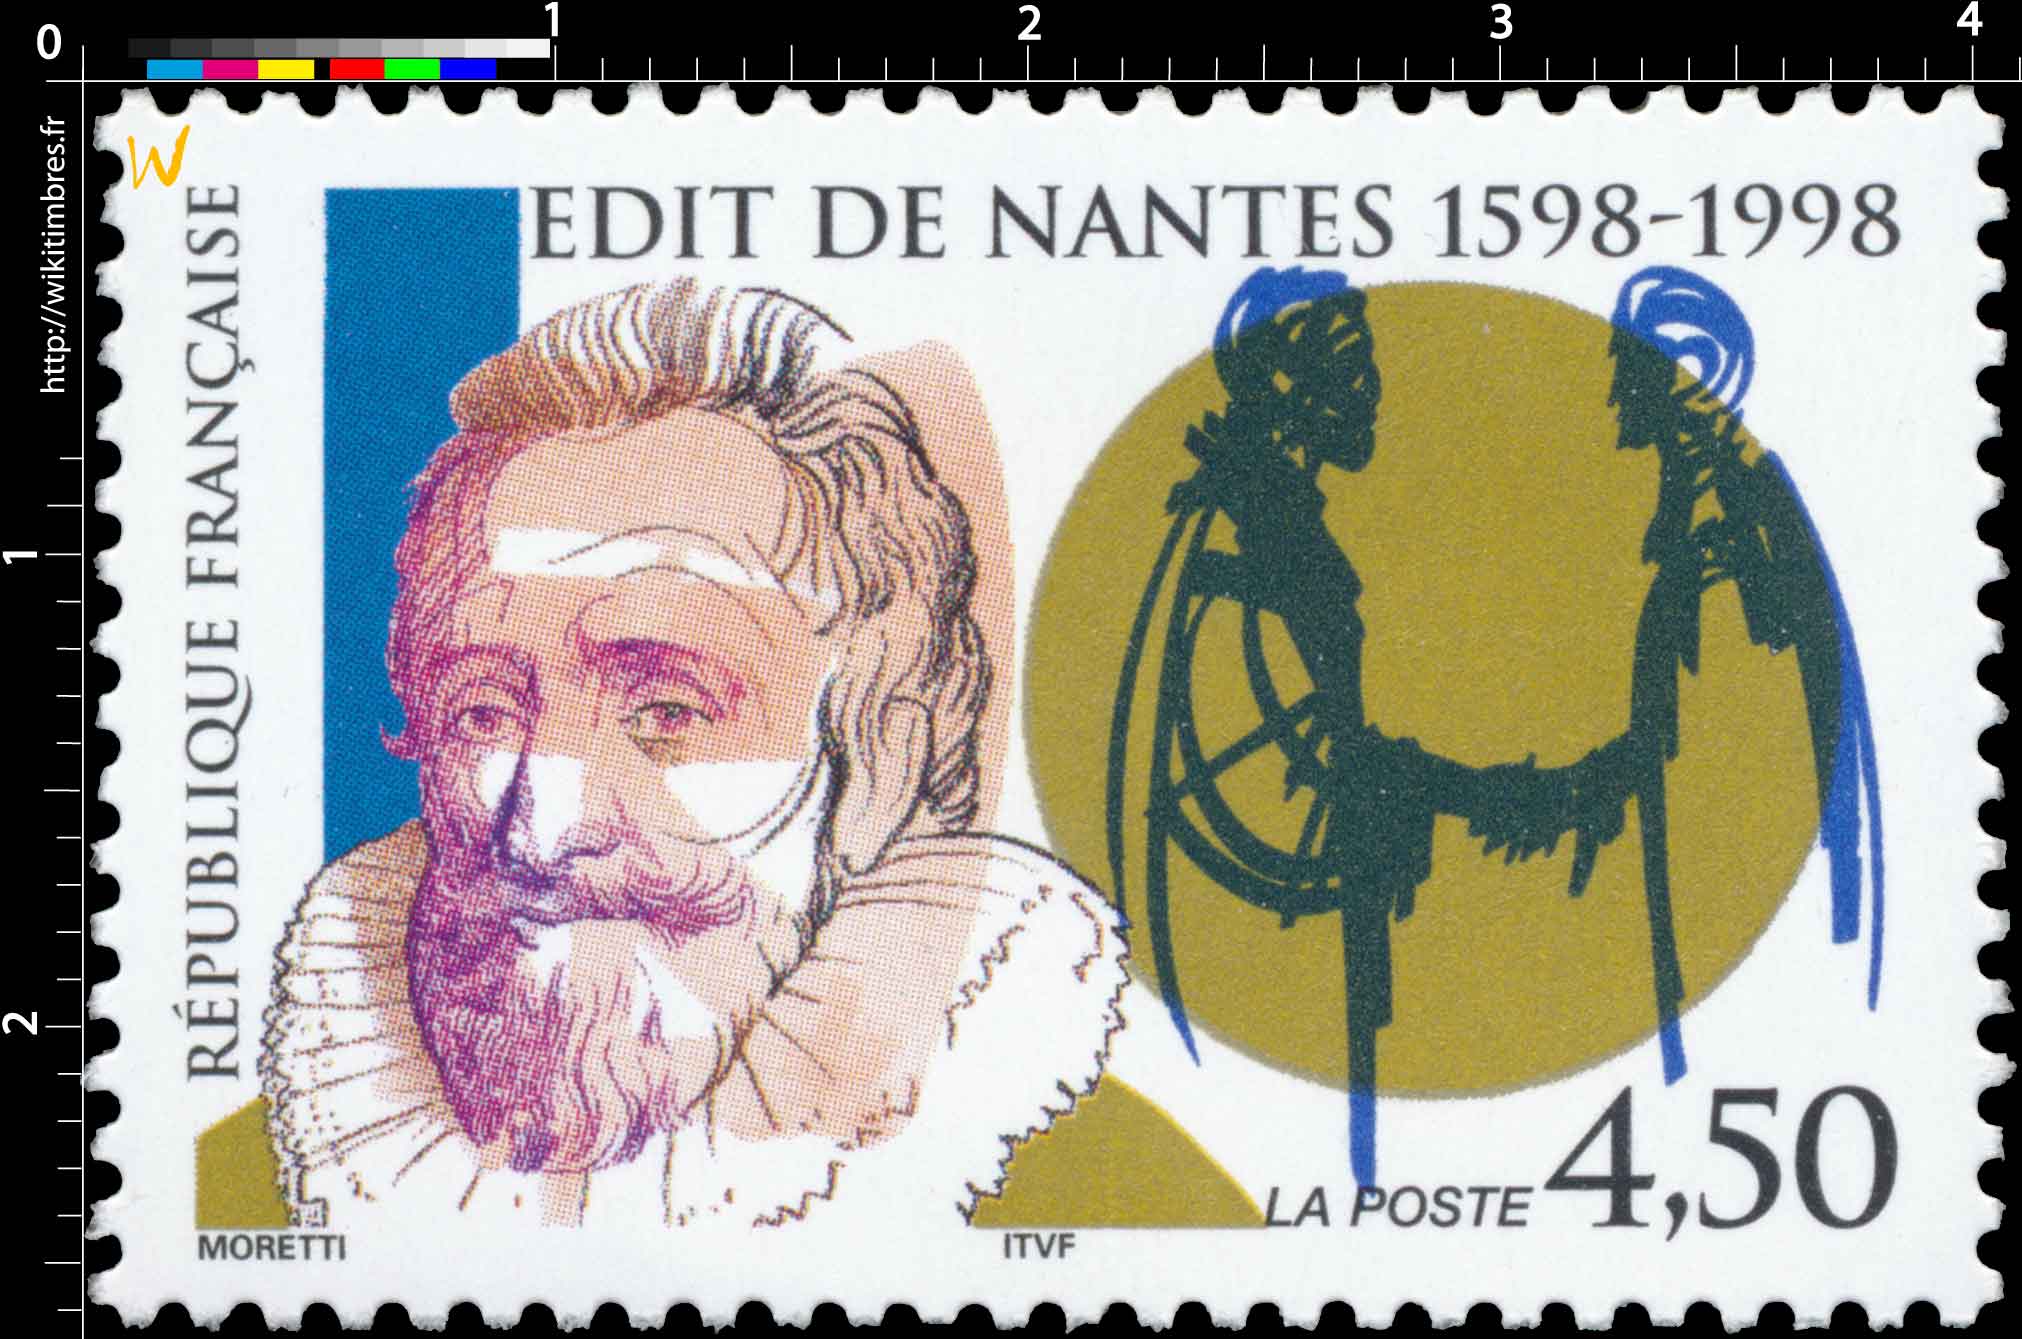 ÉDIT DE NANTES 1598-1998